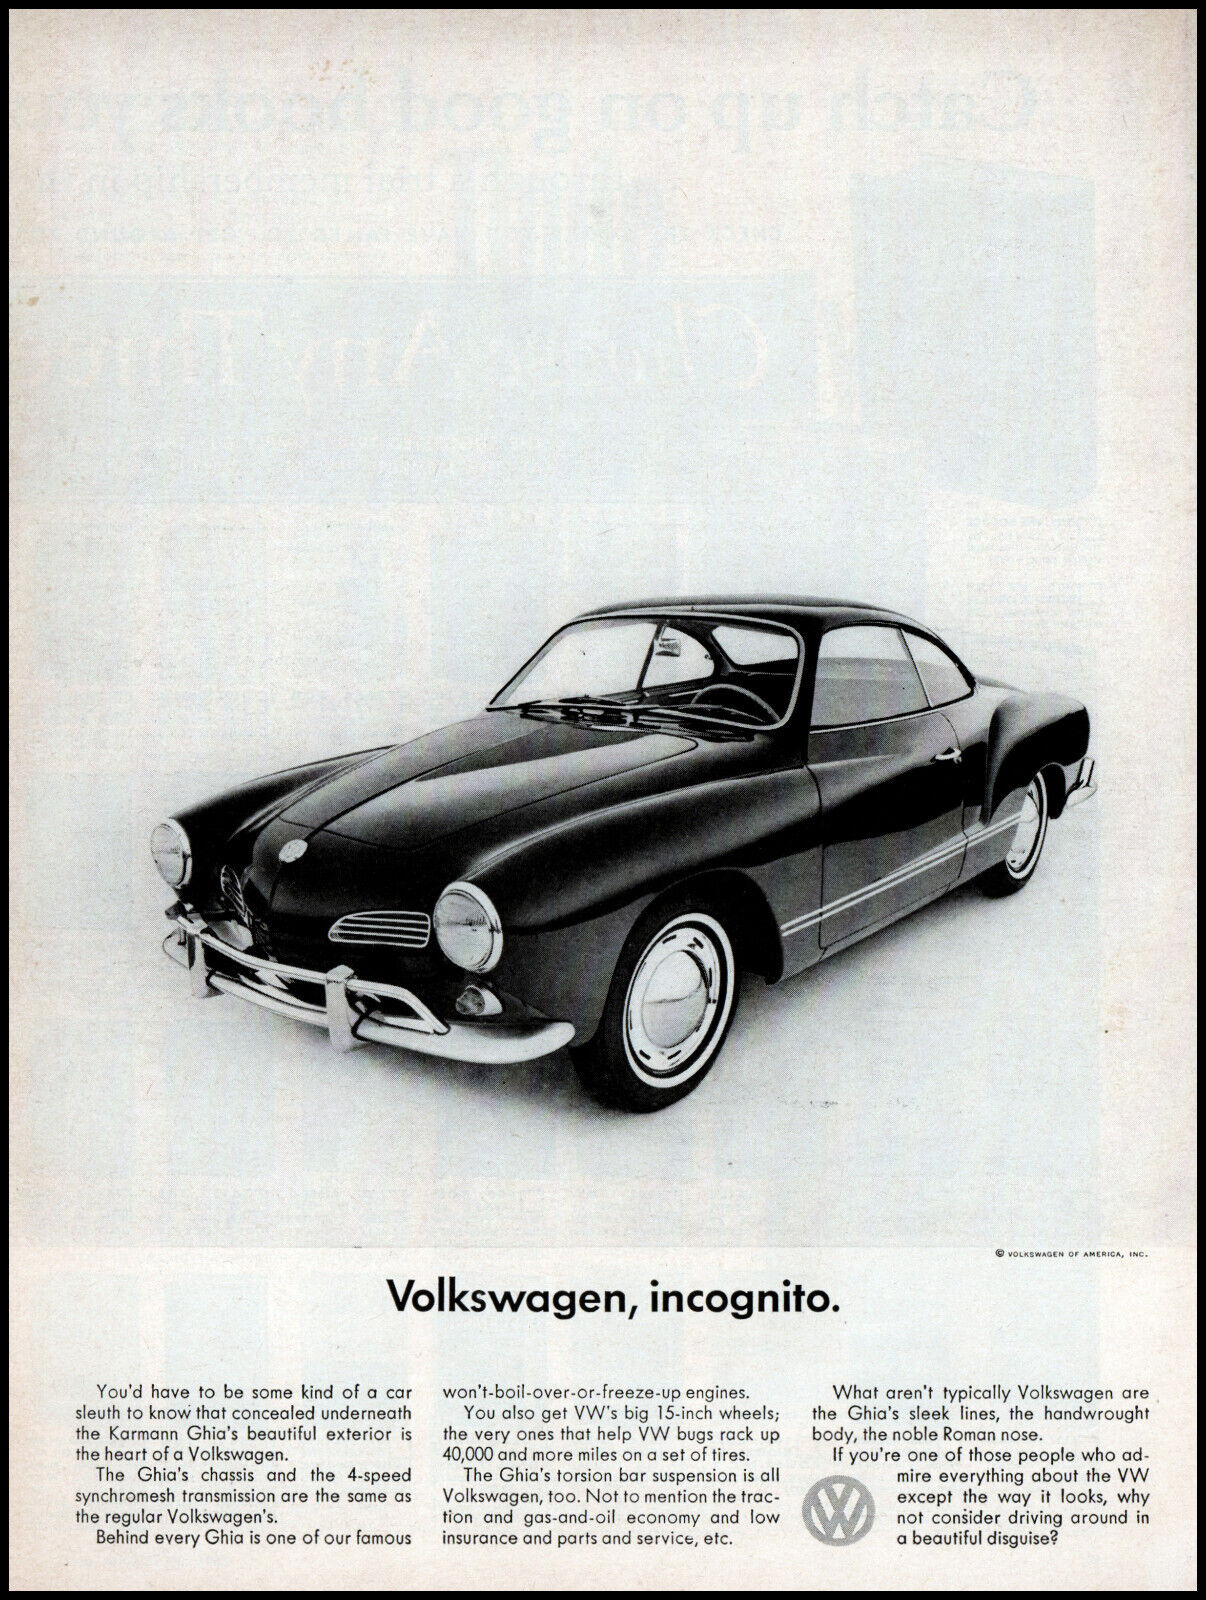 1965 Volkswagen Incognito Karmann Ghia carVW bugs retro photo print ad  S43